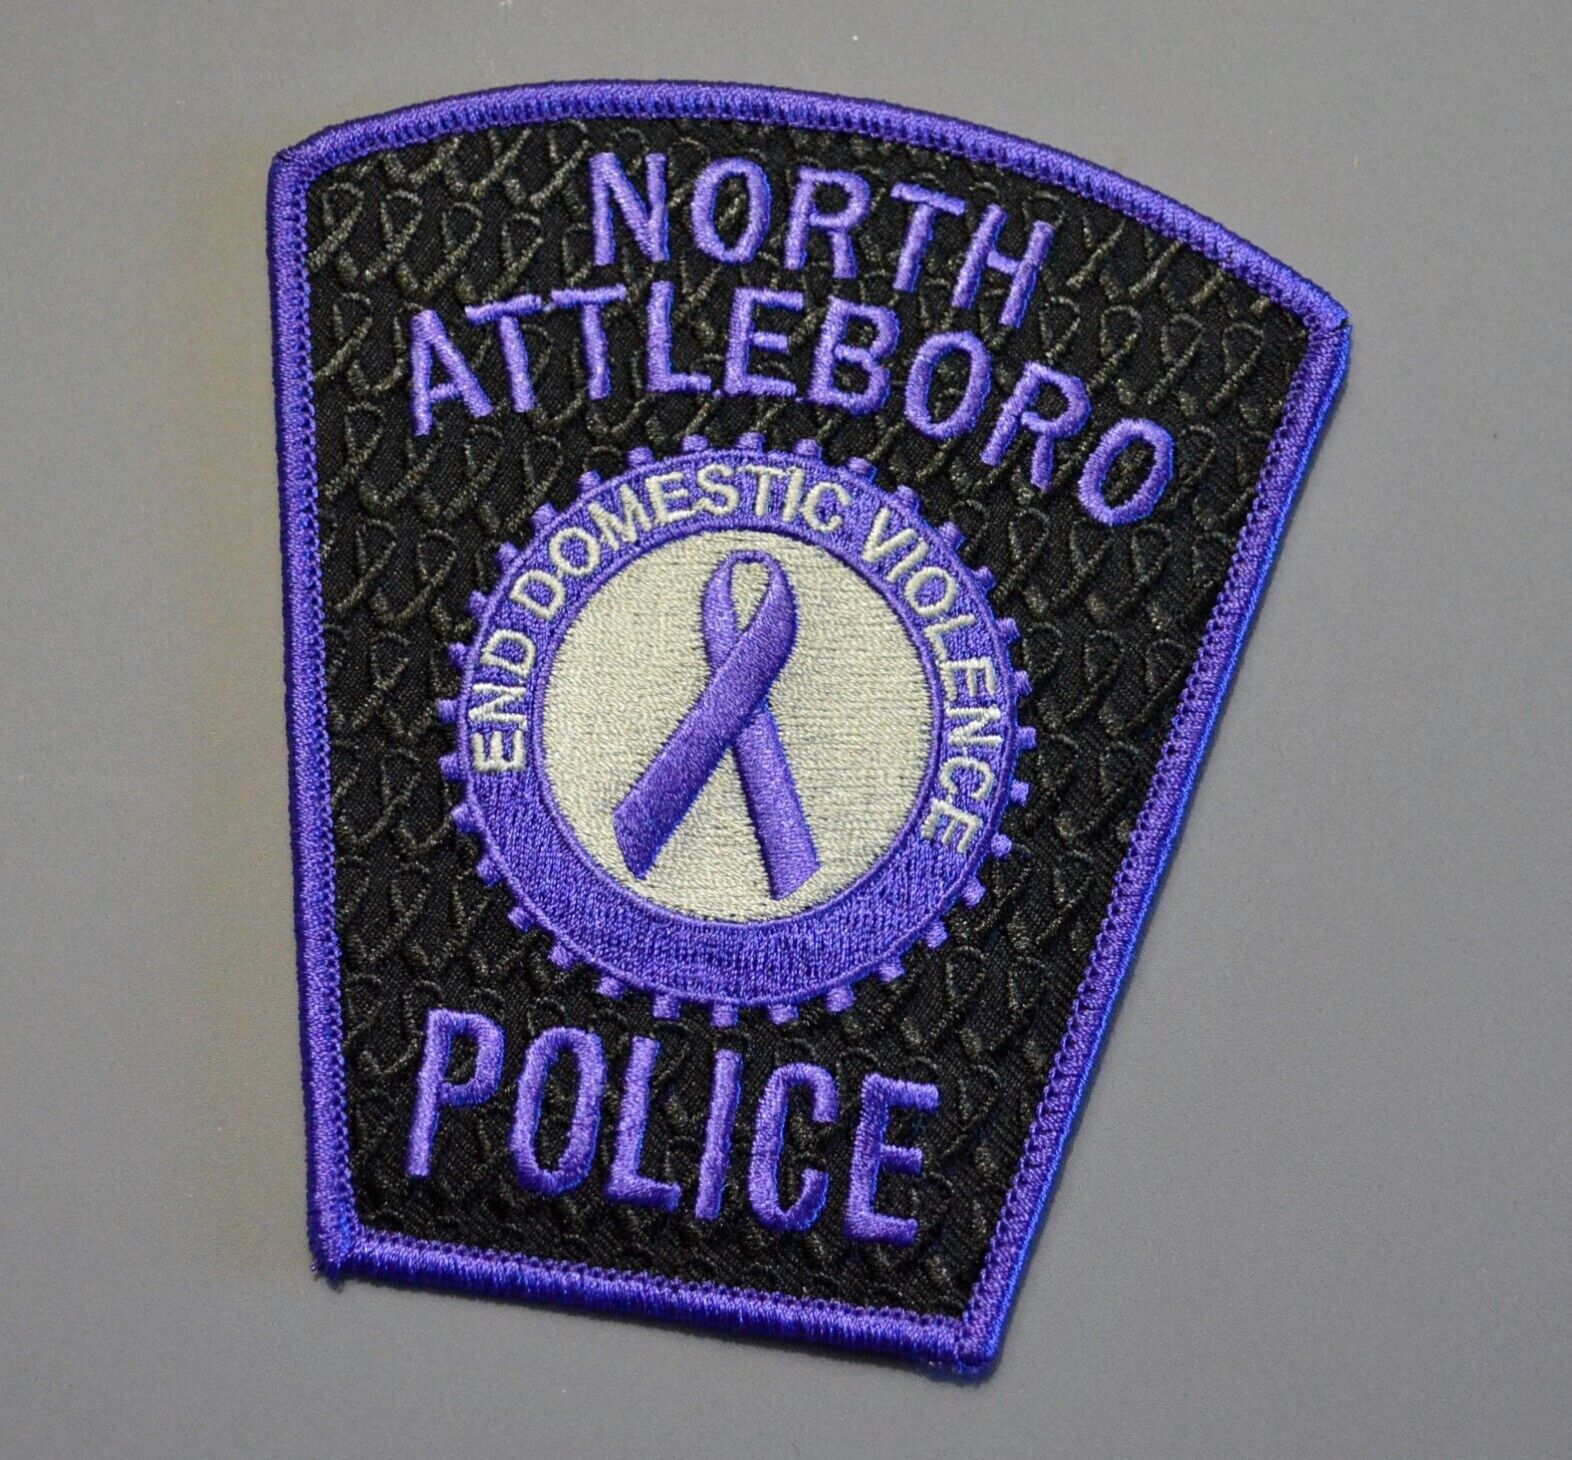 North Attleboro Massachusetts End Domestic Violence Patch ++ Mint MA